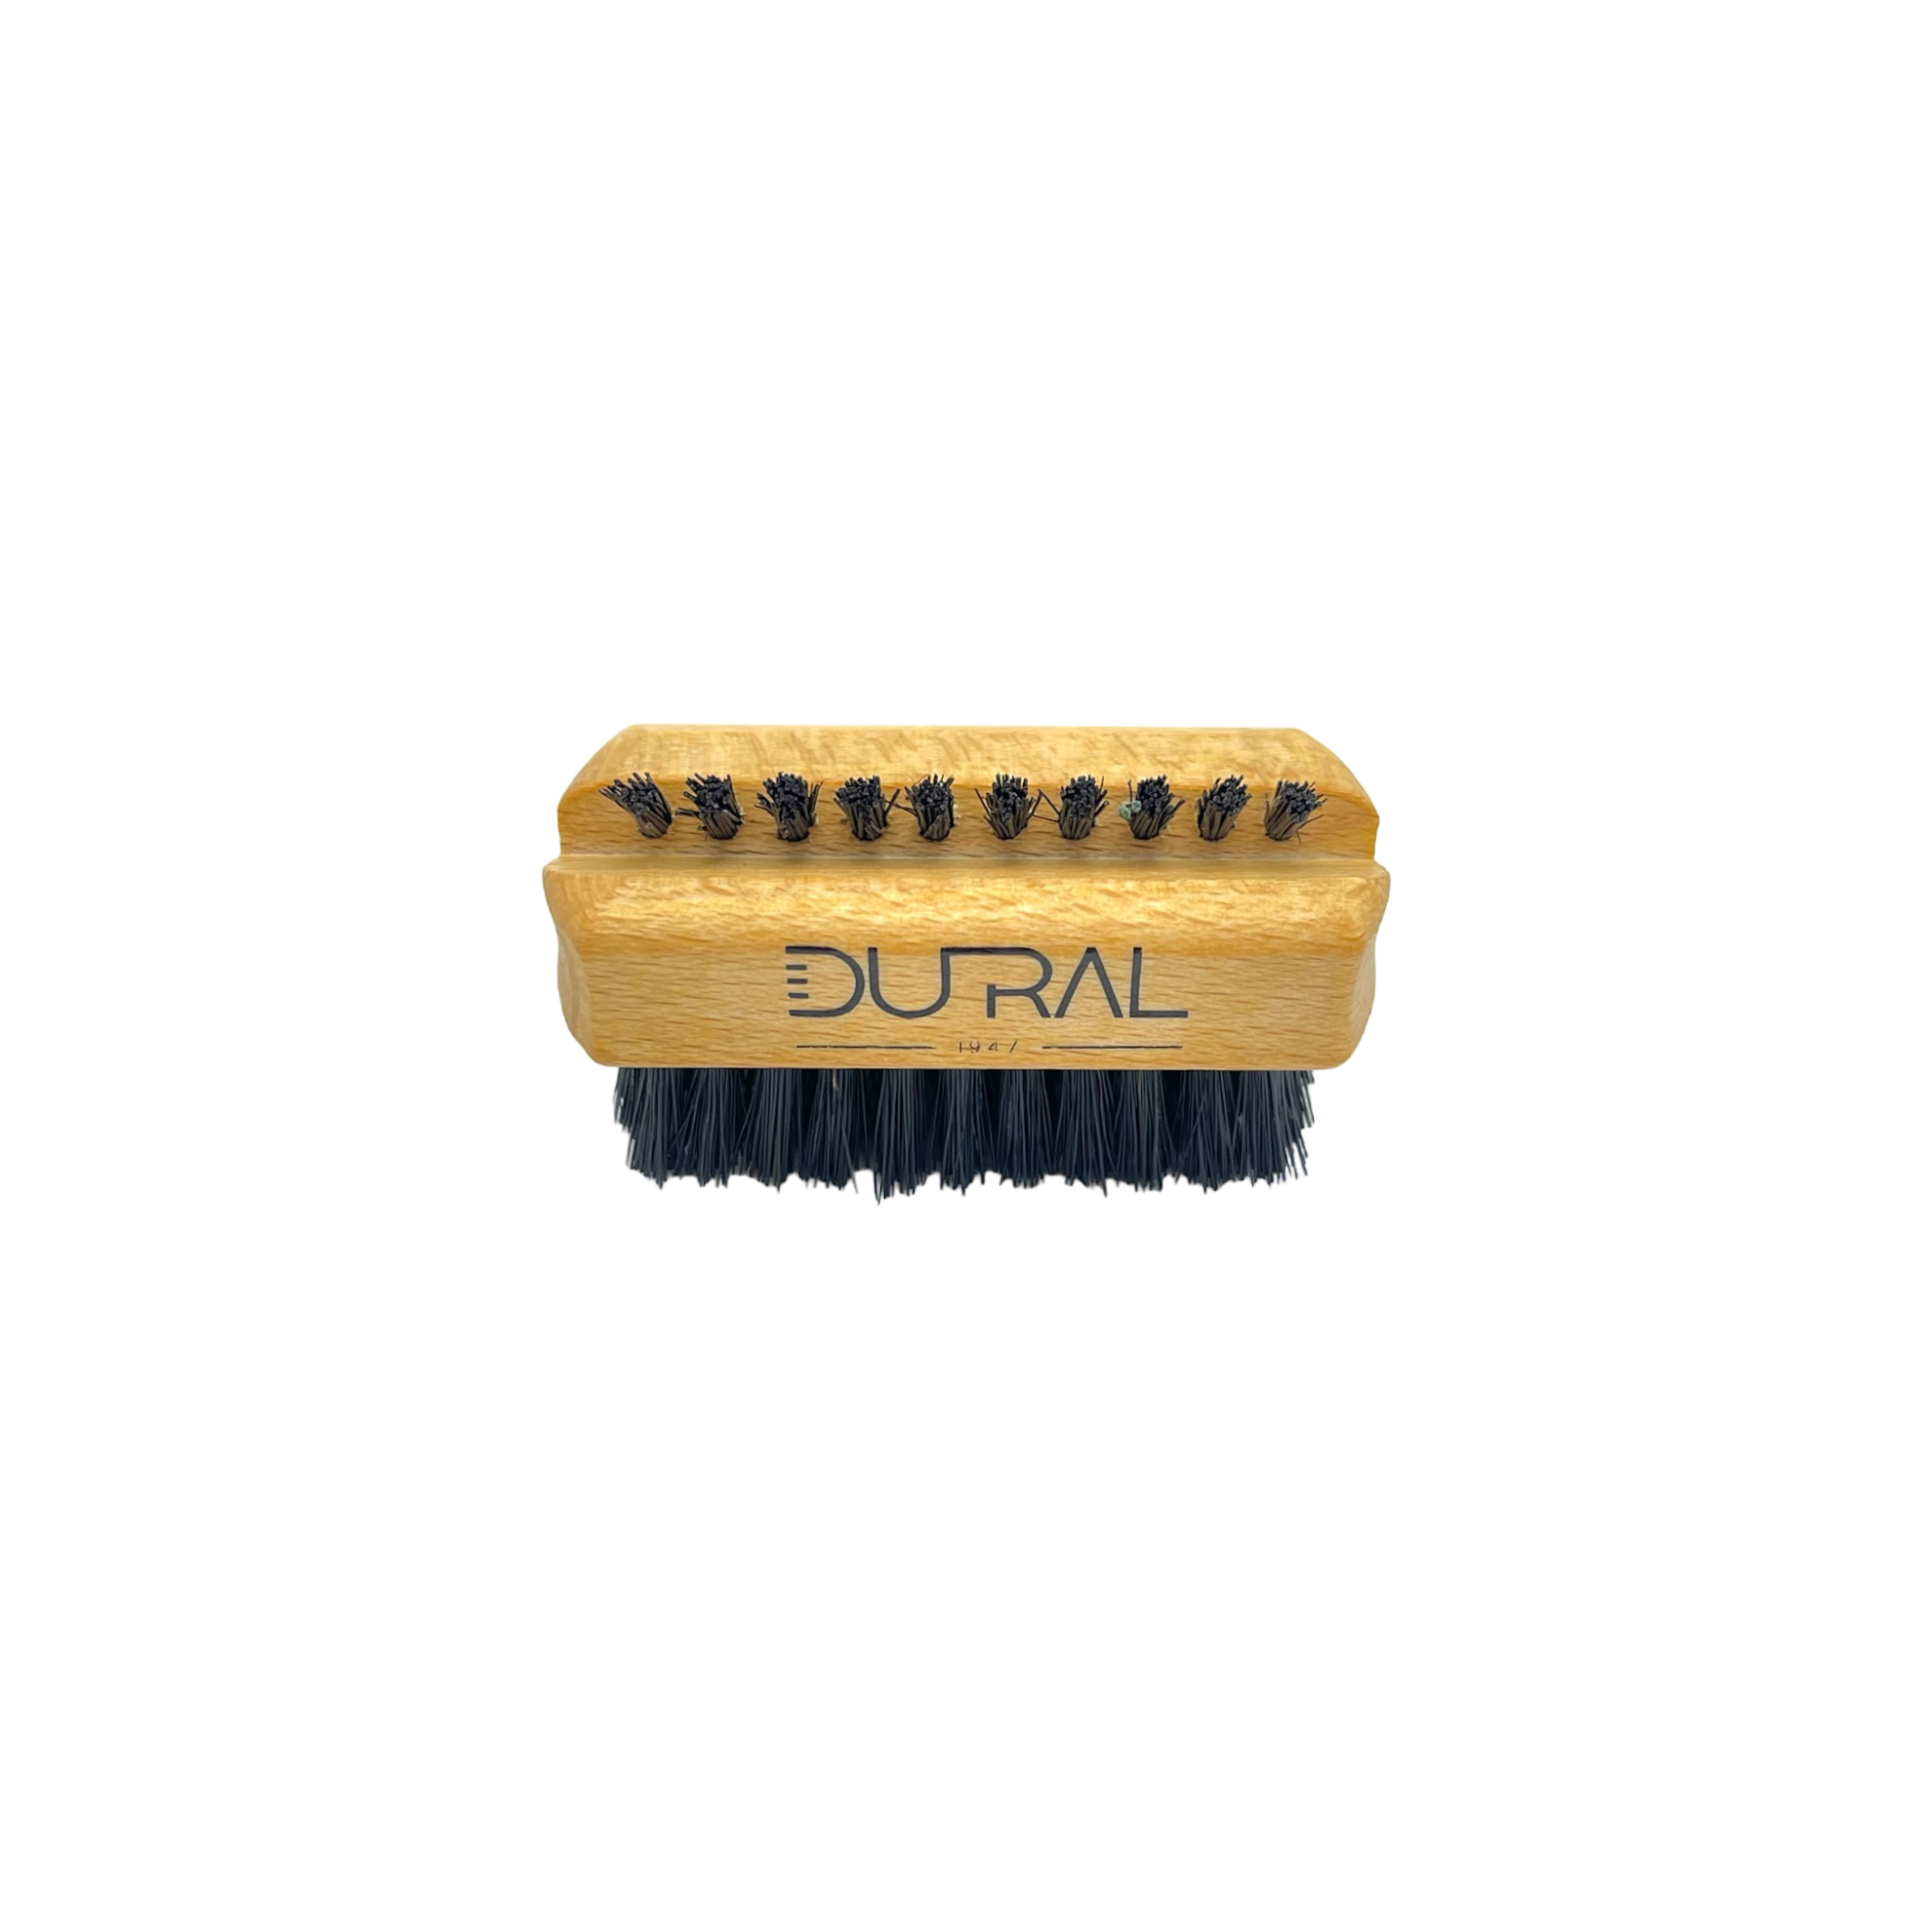 Dural Beech wood travel size hand/nail brush